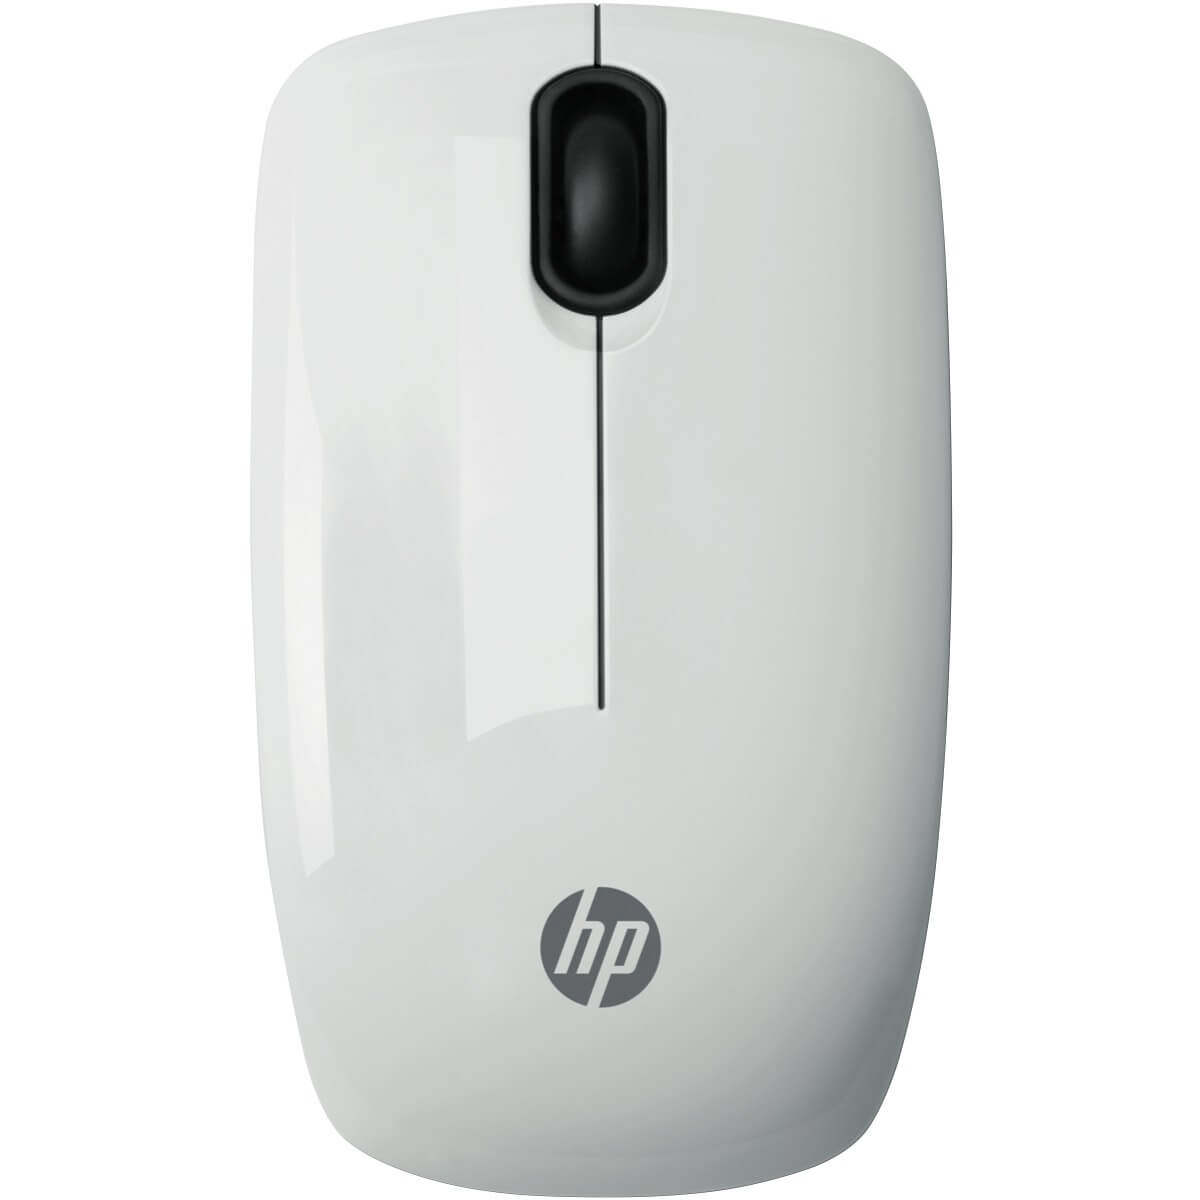  Mouse HP Z3200 E5J19AA, Wireless, USB, Alb 